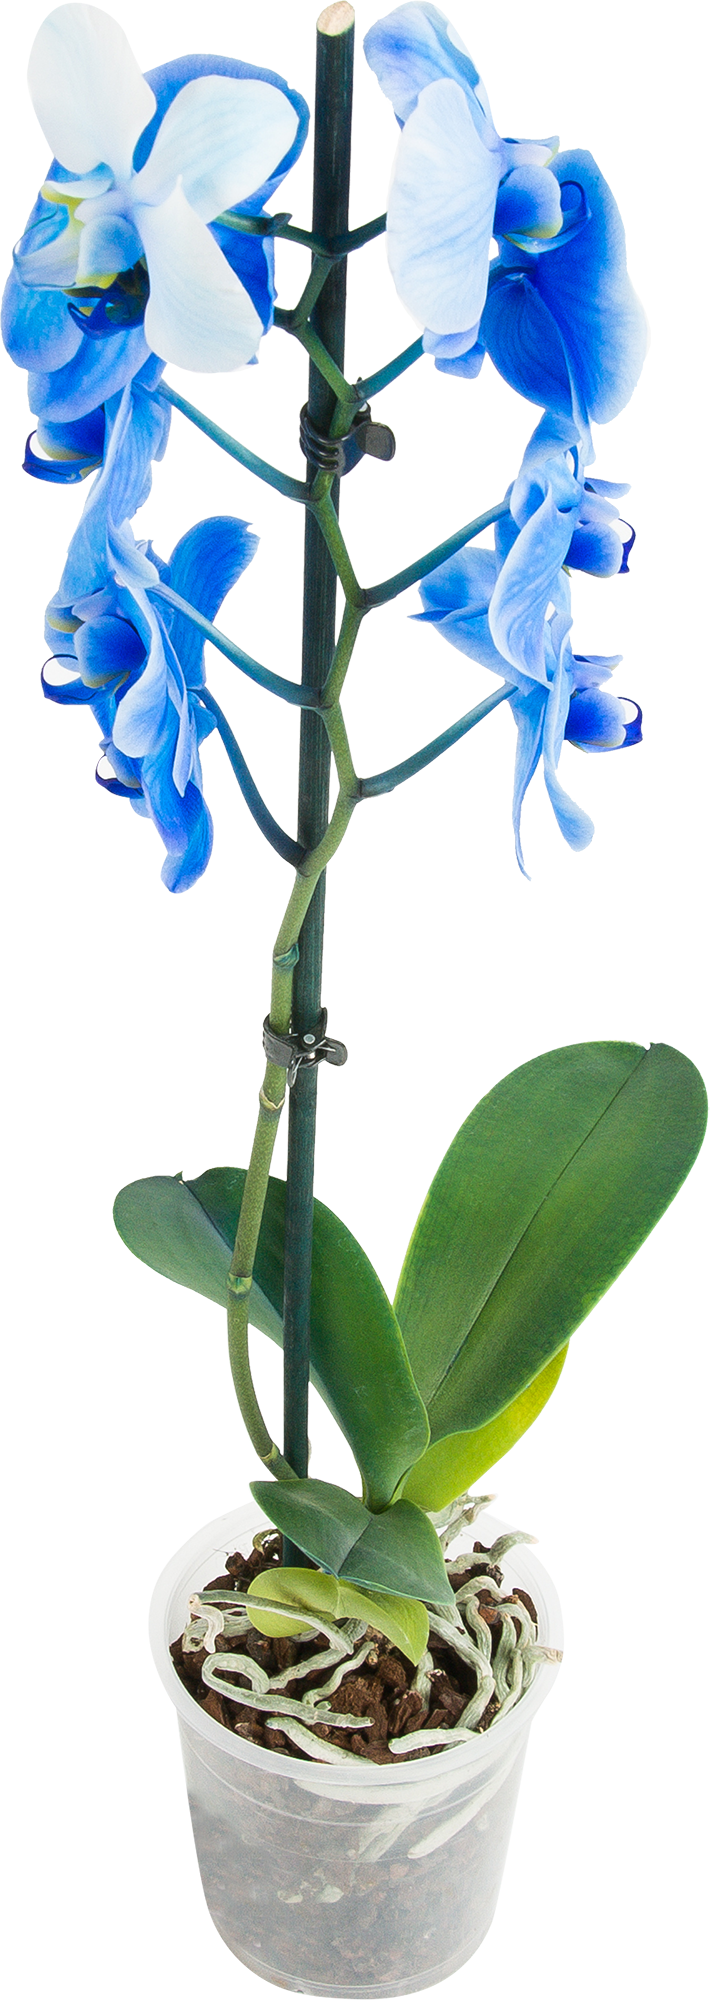 Орхидеи в Леруа Мерлен. Фаленопсис Блю Джин. Фаленопсис leroymerlin. Синяя Орхидея Леруа Мерлен. Леруа мерлен орхидея в горшке